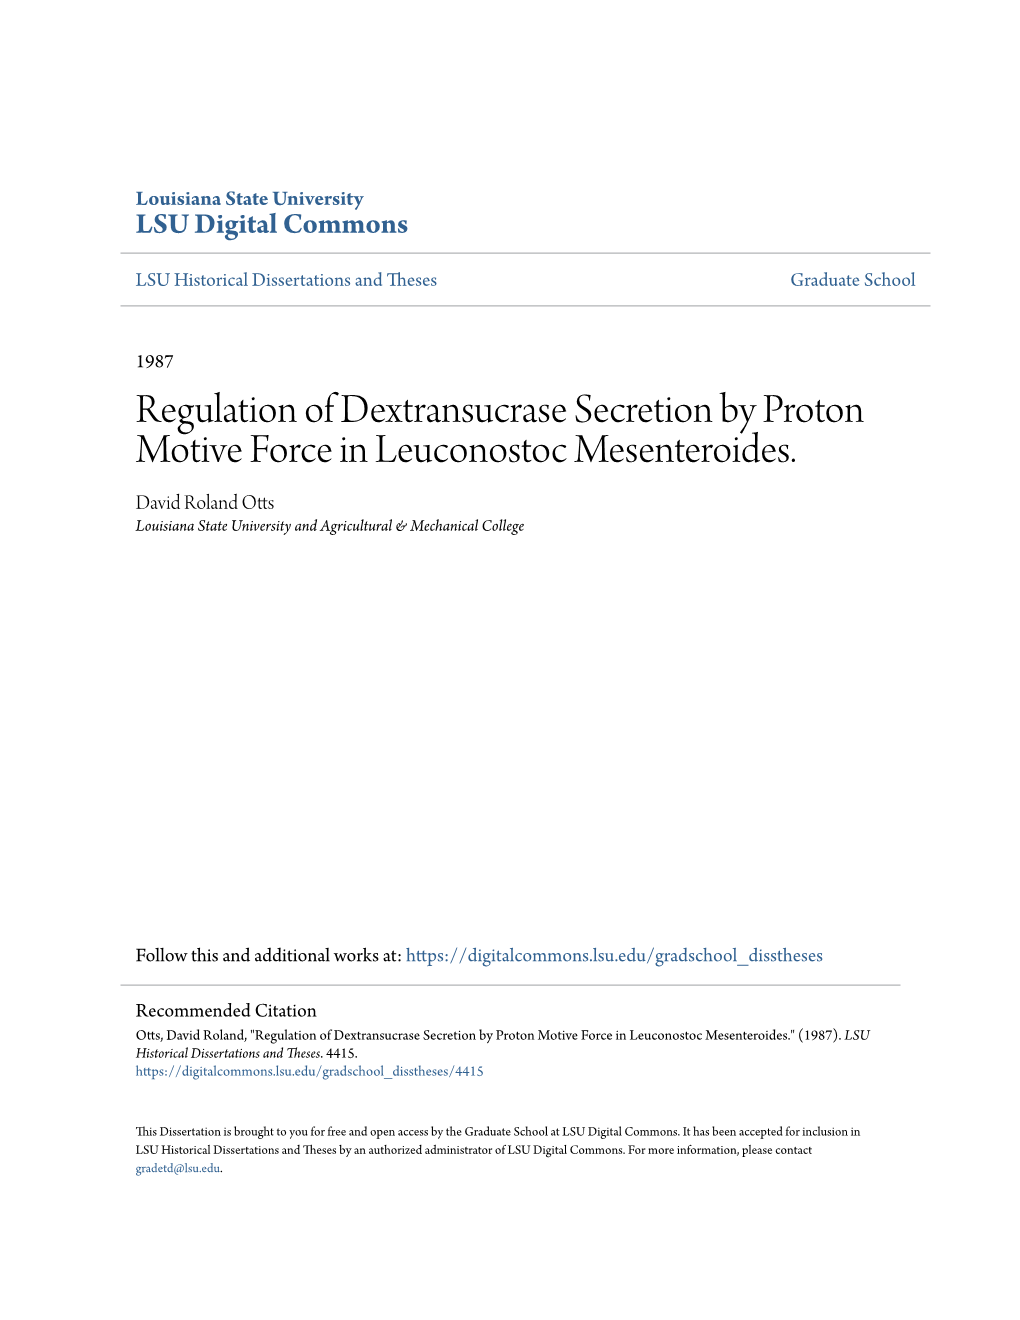 Regulation of Dextransucrase Secretion by Proton Motive Force in Leuconostoc Mesenteroides